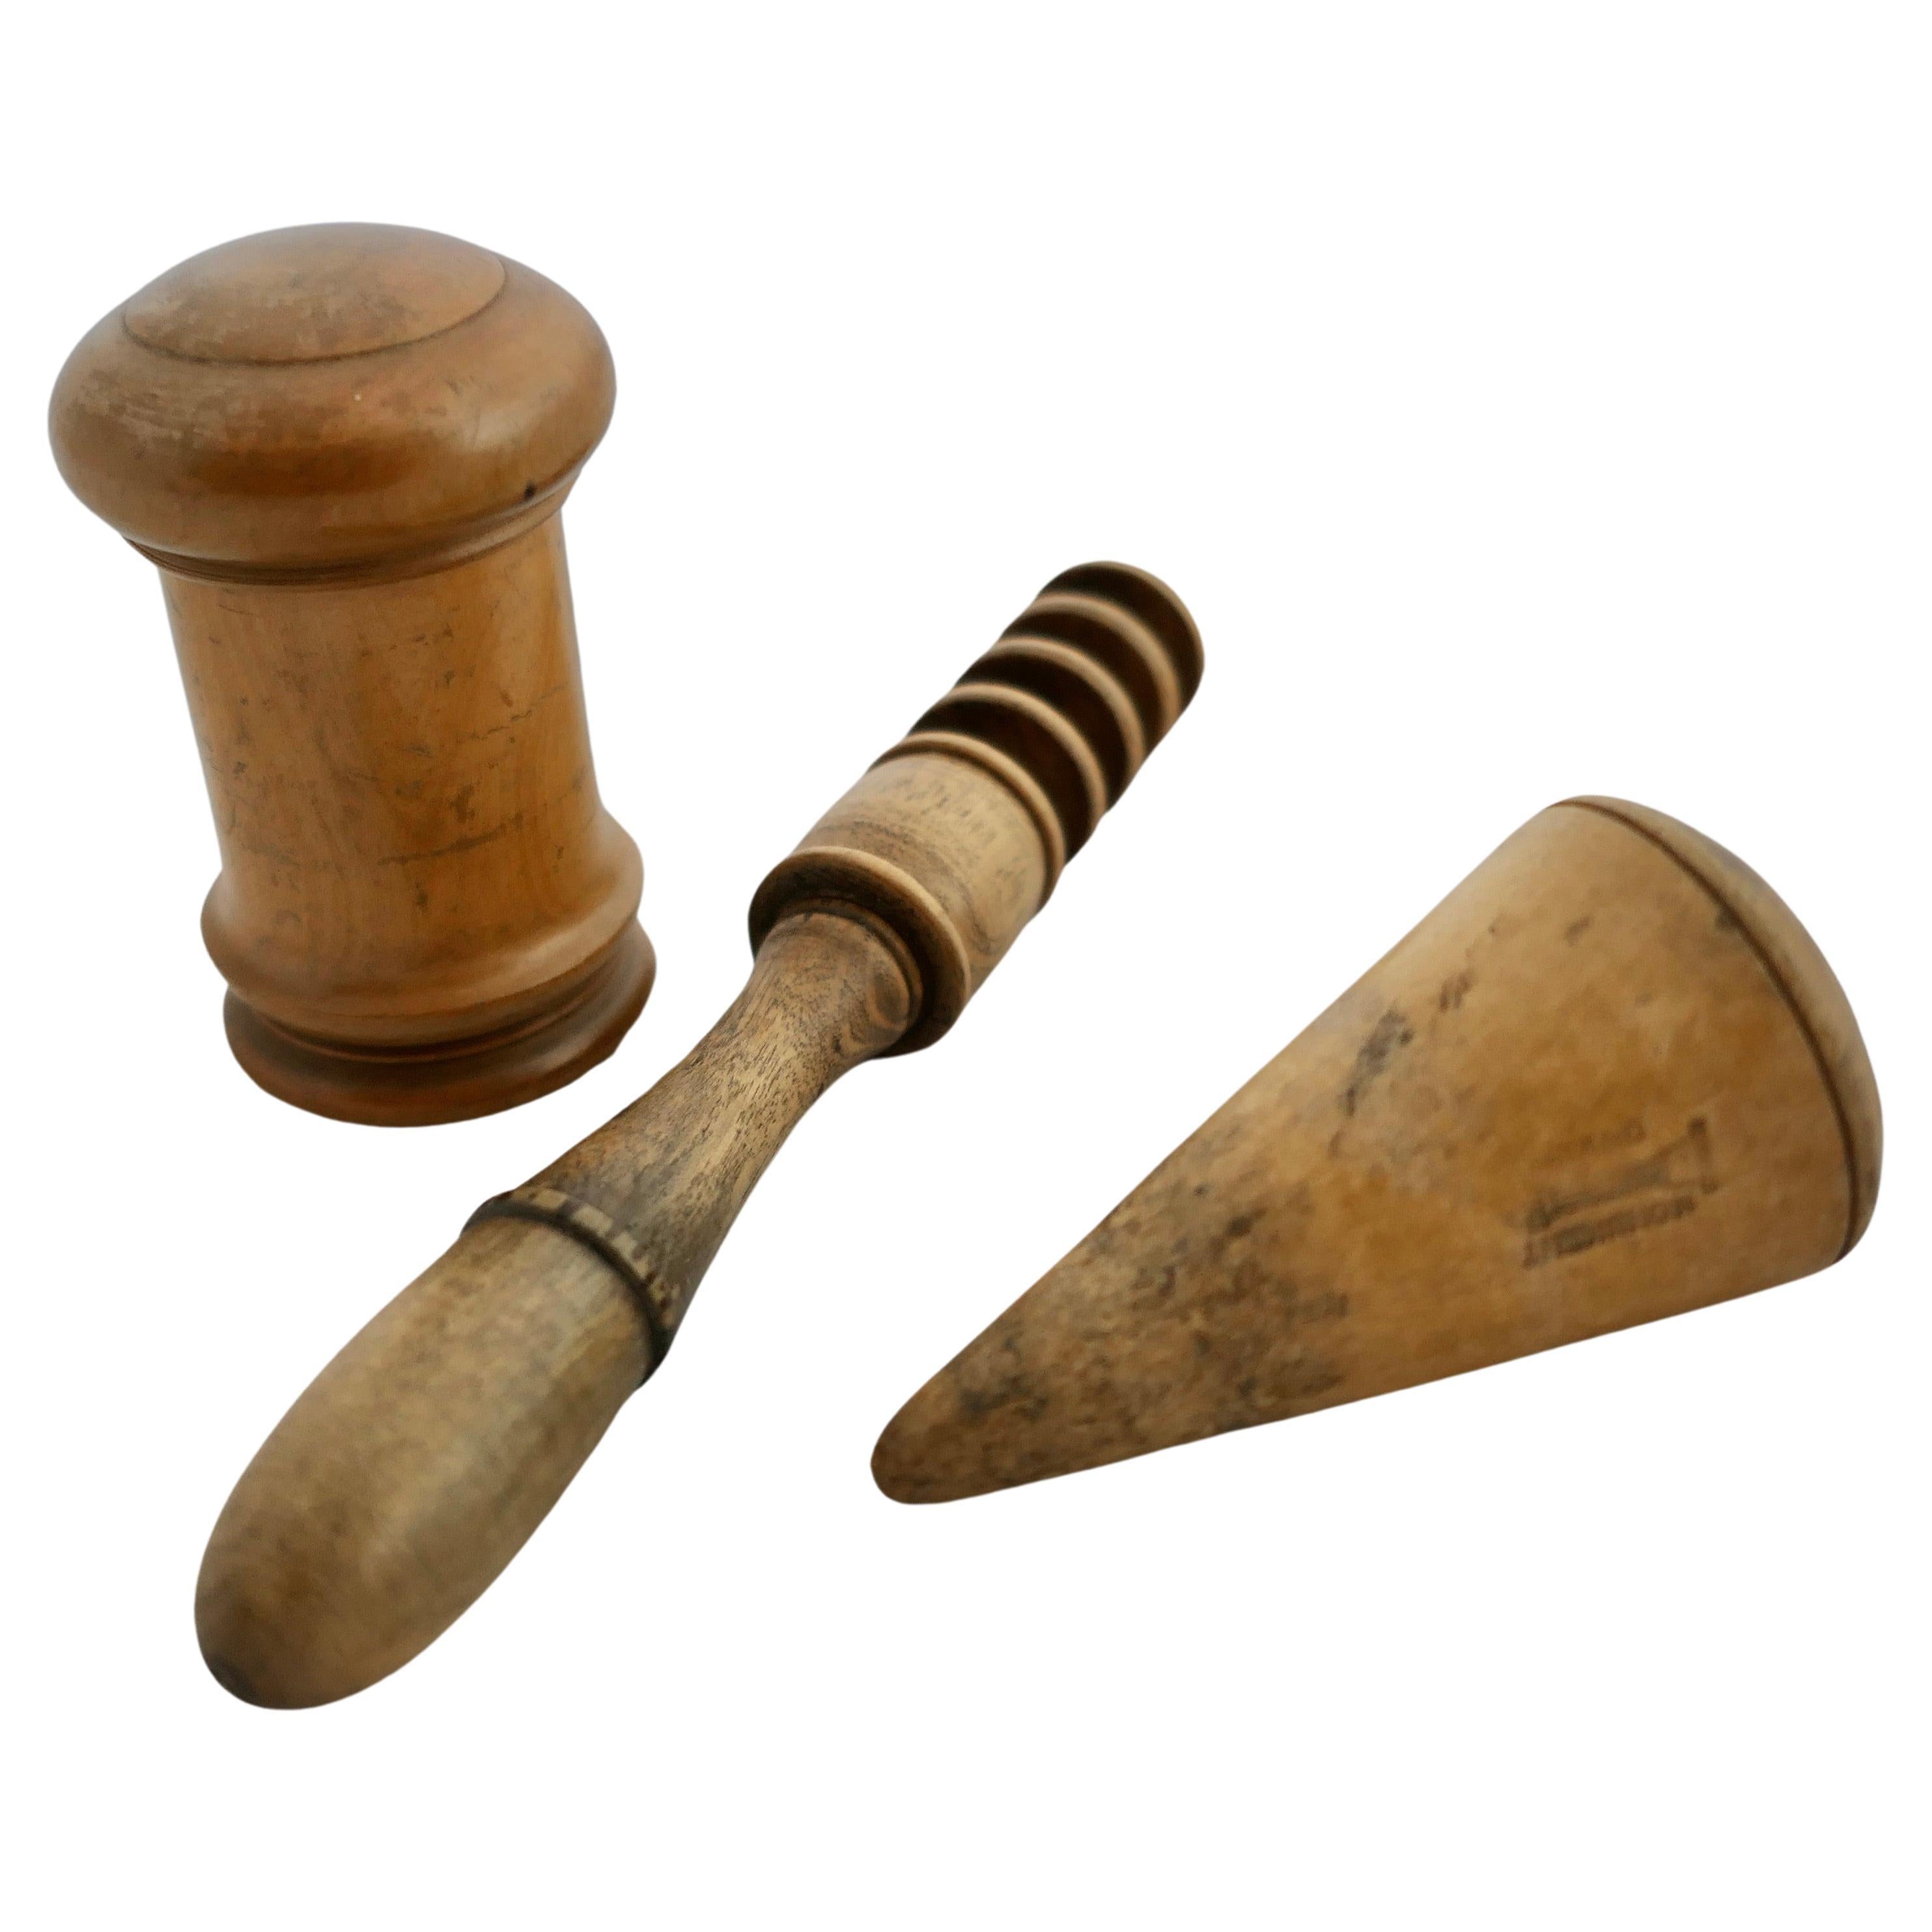 3 19th century Hand Made Treen Items, Pounce, Plumb Bob, Bodkin    For Sale